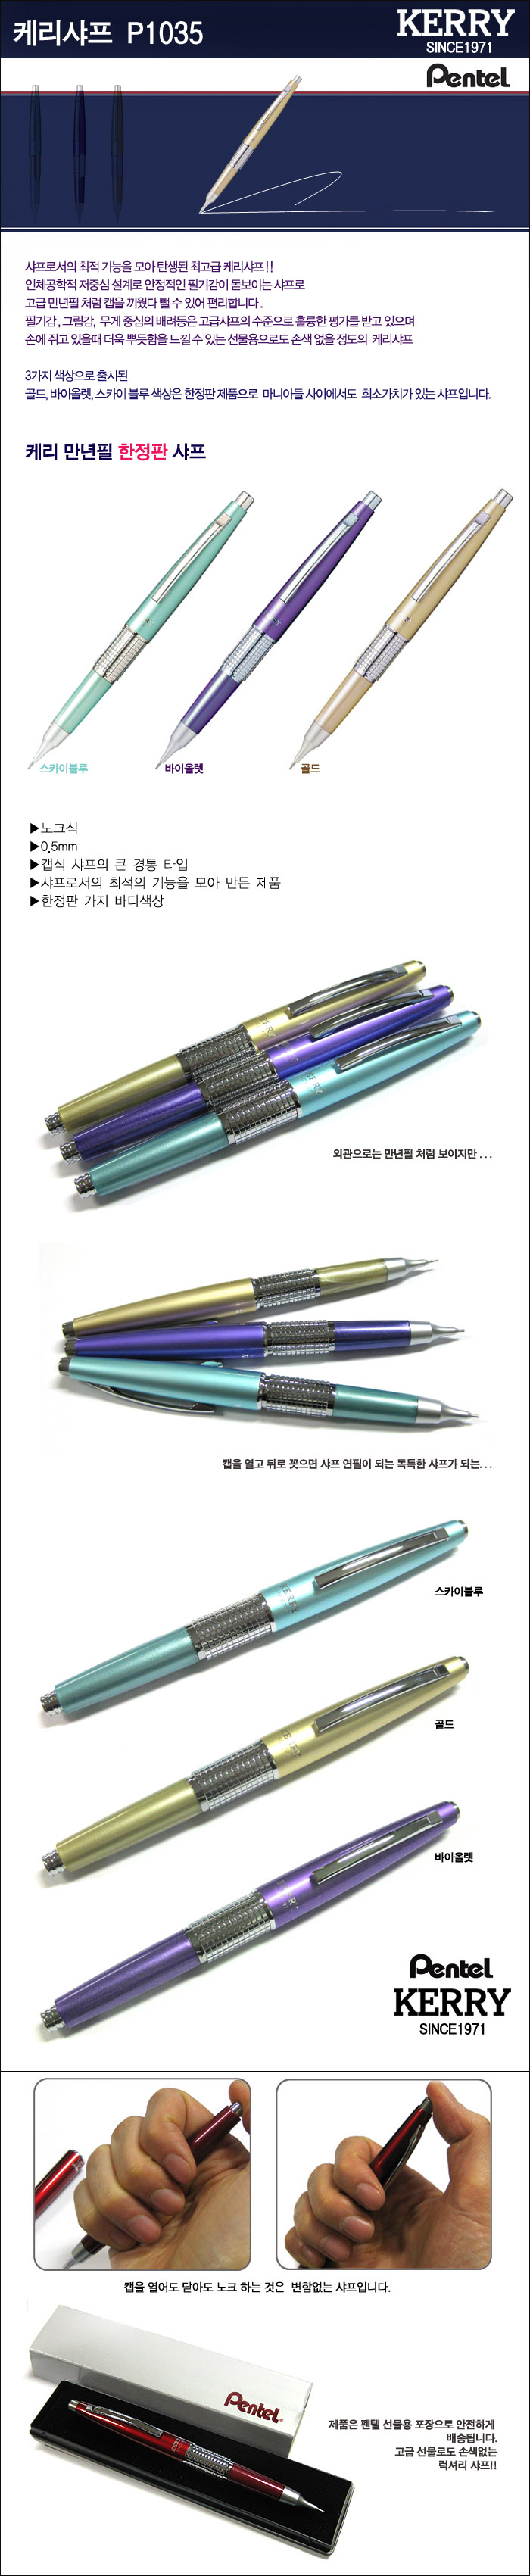 Genuine/Pentel/Kerry Mechanical Pencil Limited Edition/Original Case/P1035-XD/3Color/Fountain Pen/Kerry Limited/Pentel